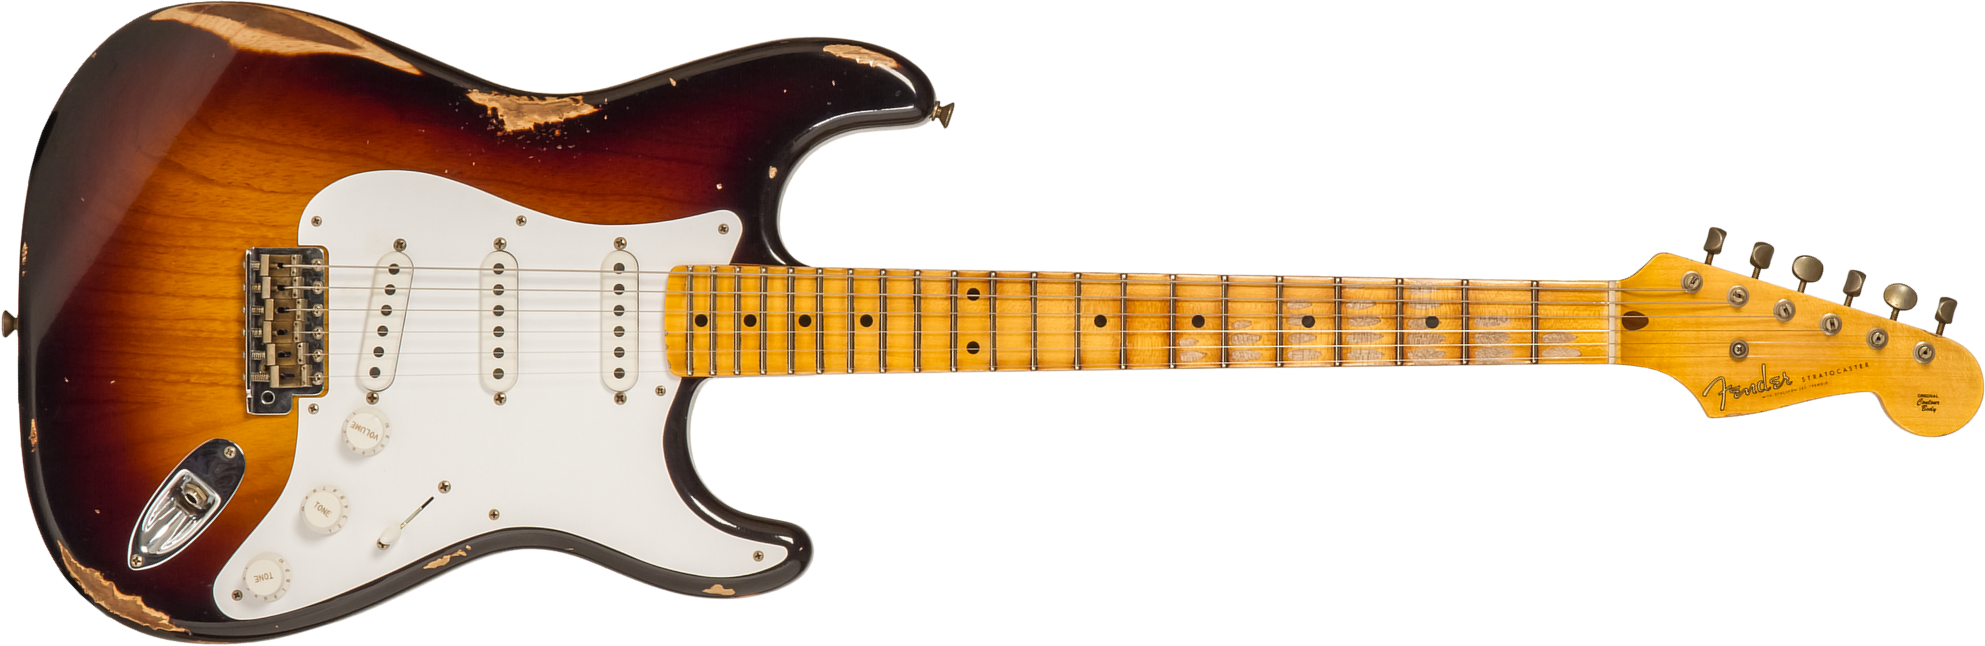 Fender Custom Shop Strat 1954 70th Anniv. 3s Trem Mn #xn4316 - Relic Wide Fade 2-color Sunburst - Str shape electric guitar - Main picture